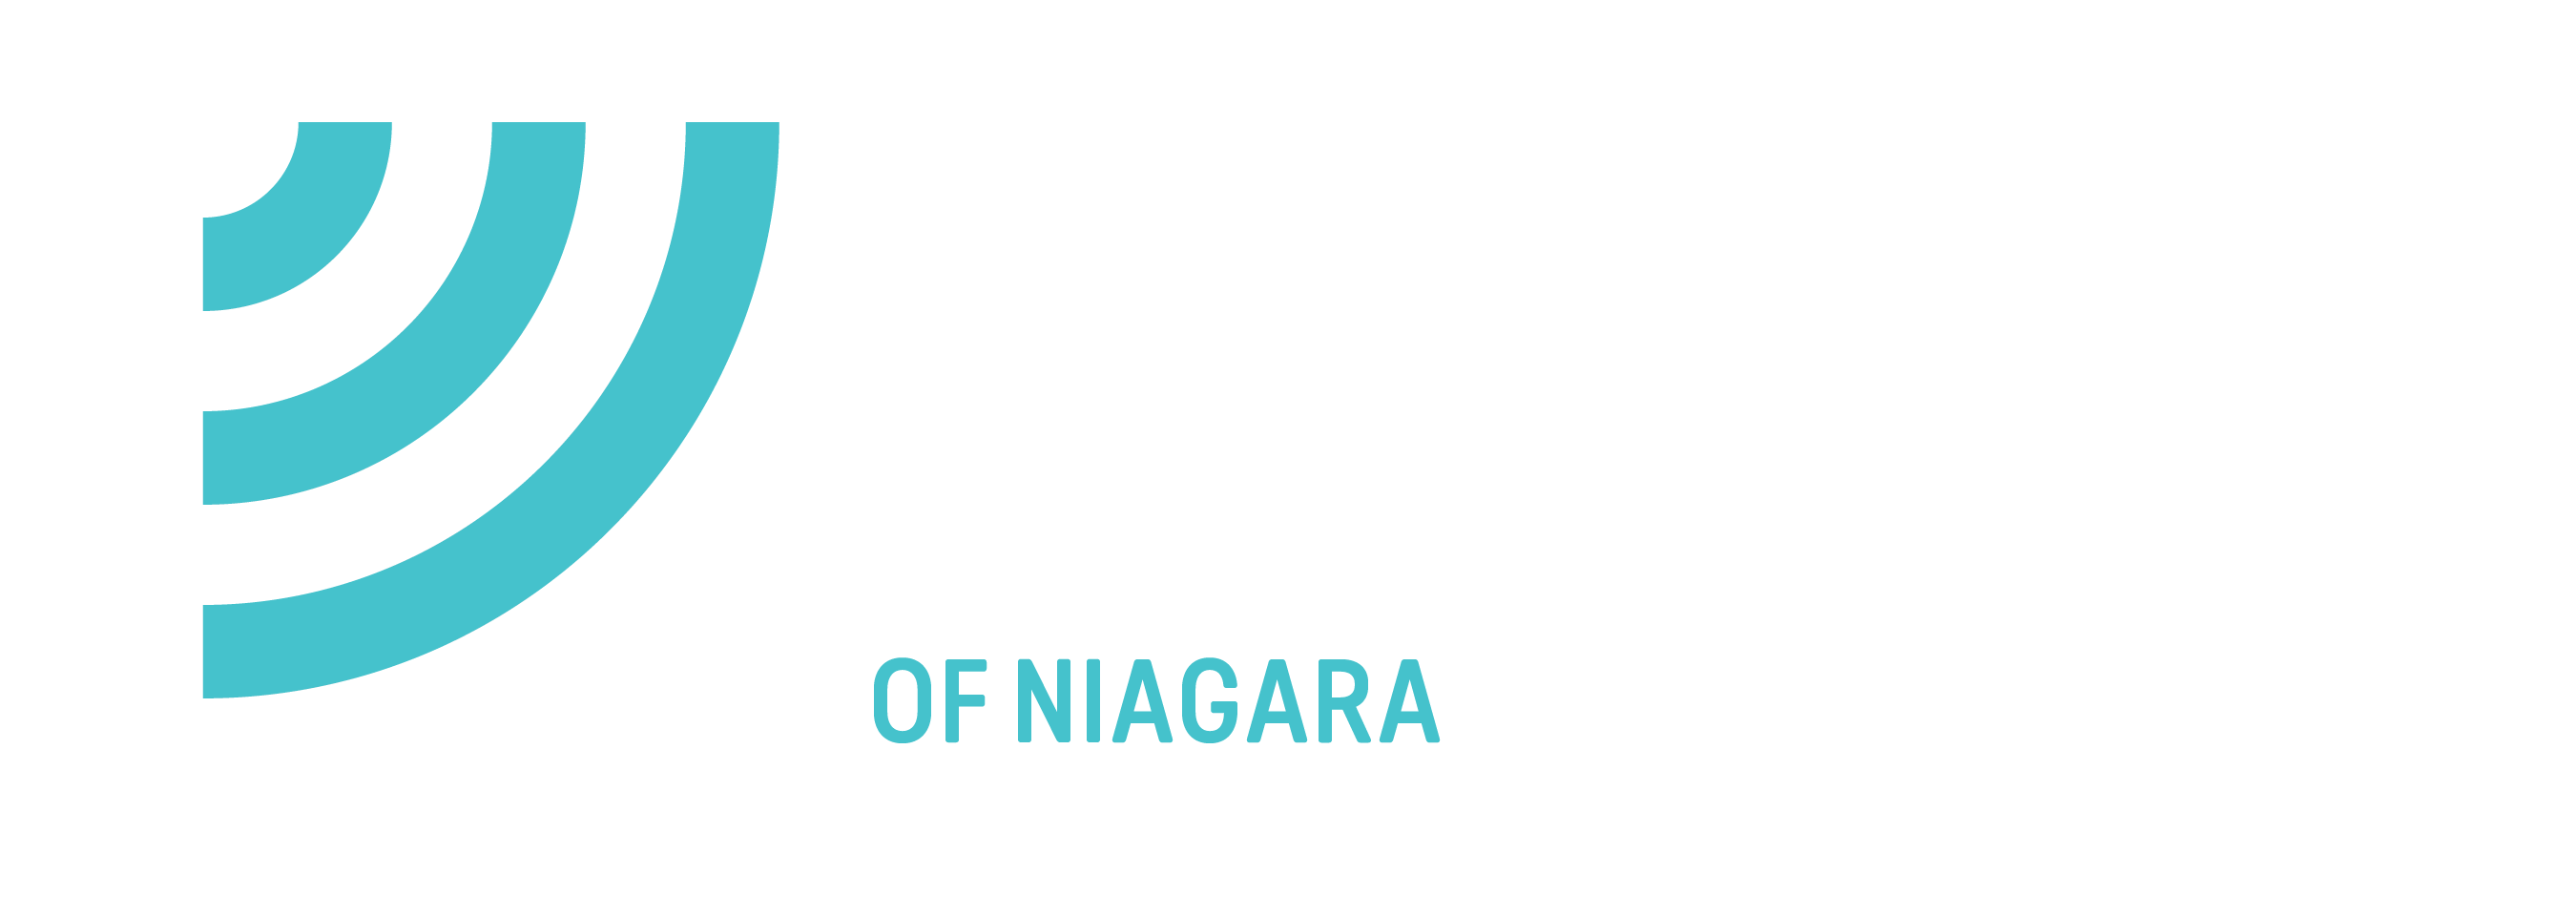 THE REWARDS OF BEING A BIG SISTER - Big Brothers Big Sisters of Niagara